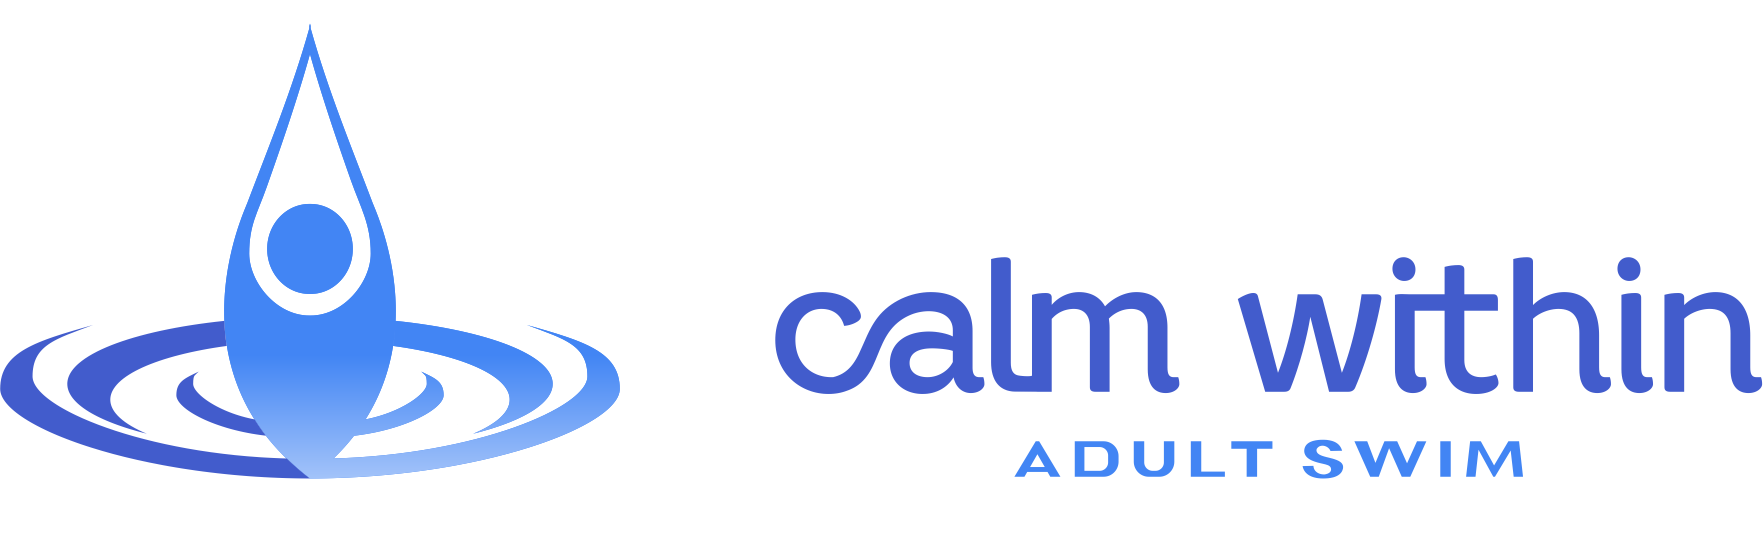 Calm Within Adult Swim